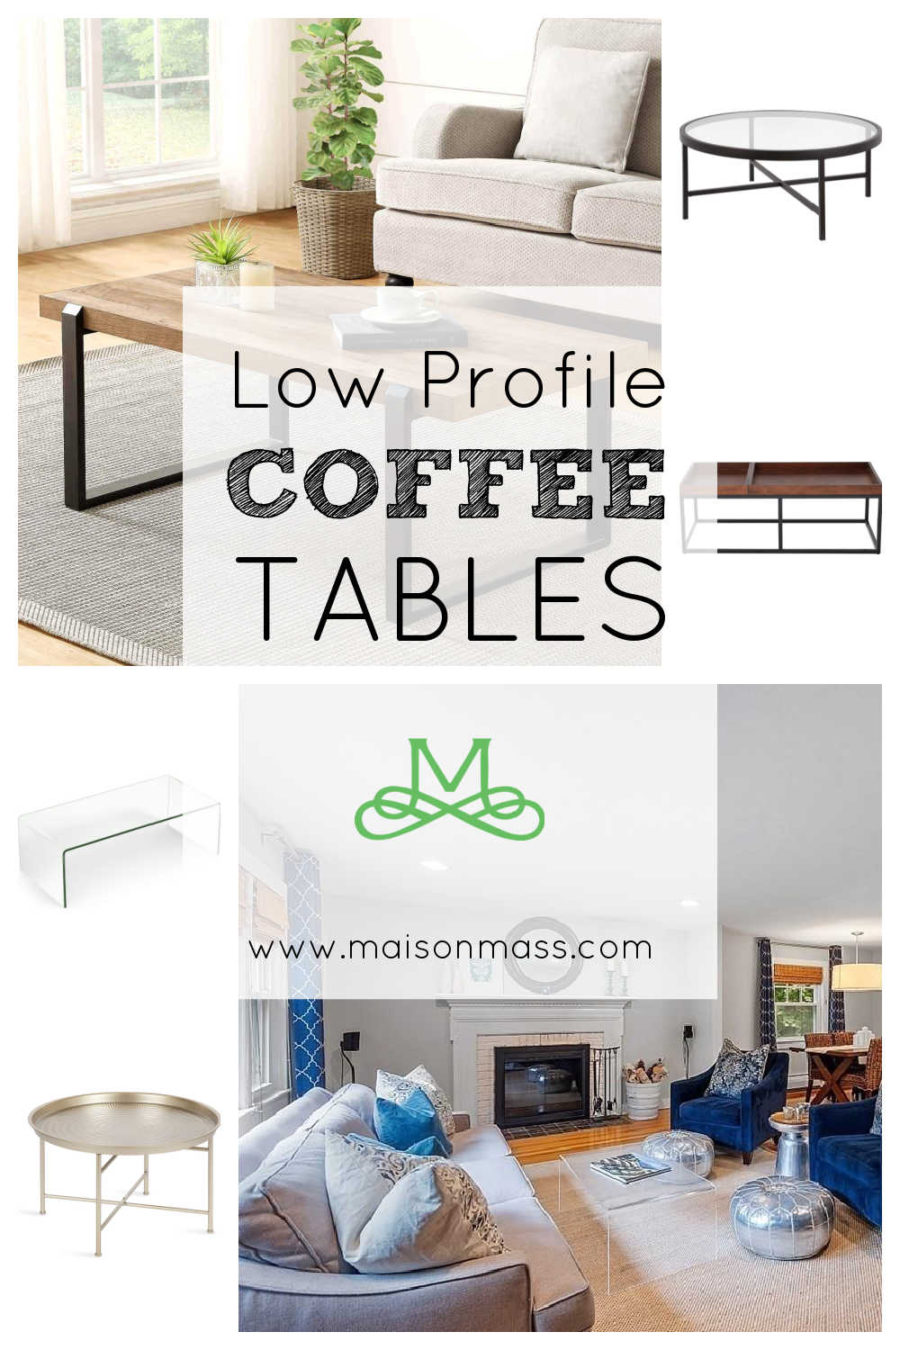 Low Profi;e Coffee Tables